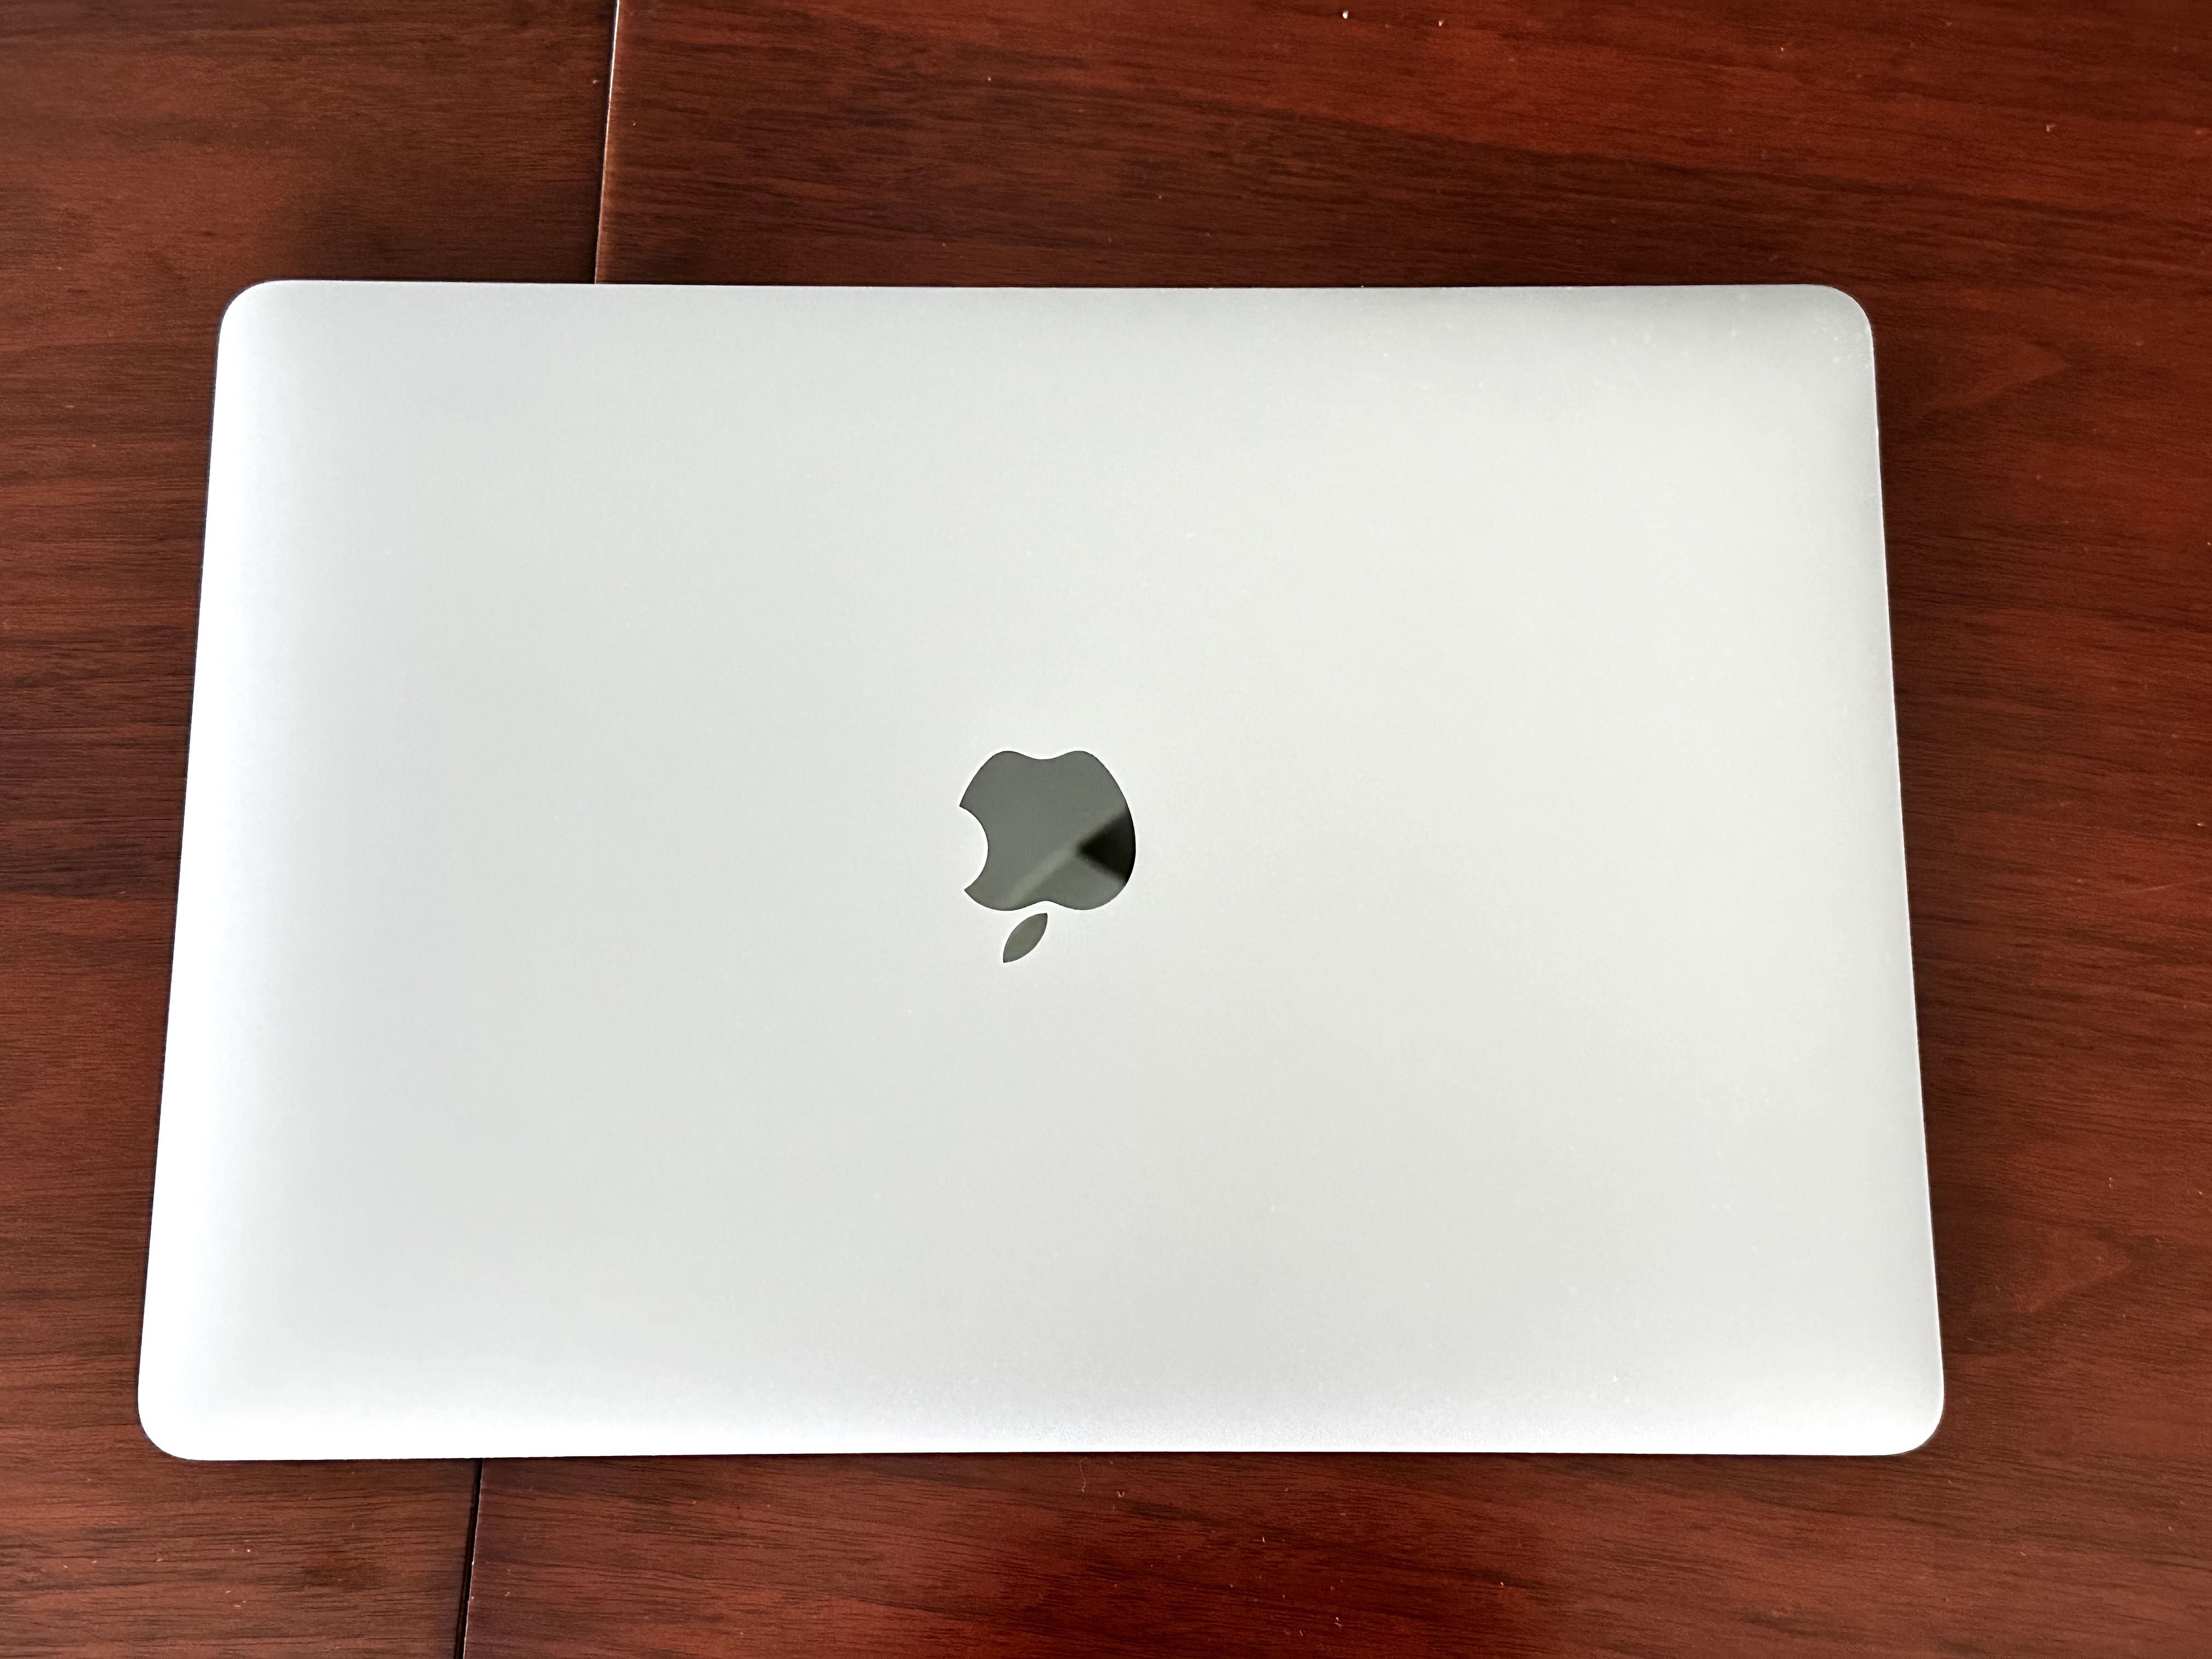 MacBook Air 2020 год 256 гб 8 гб Озу Space Grey